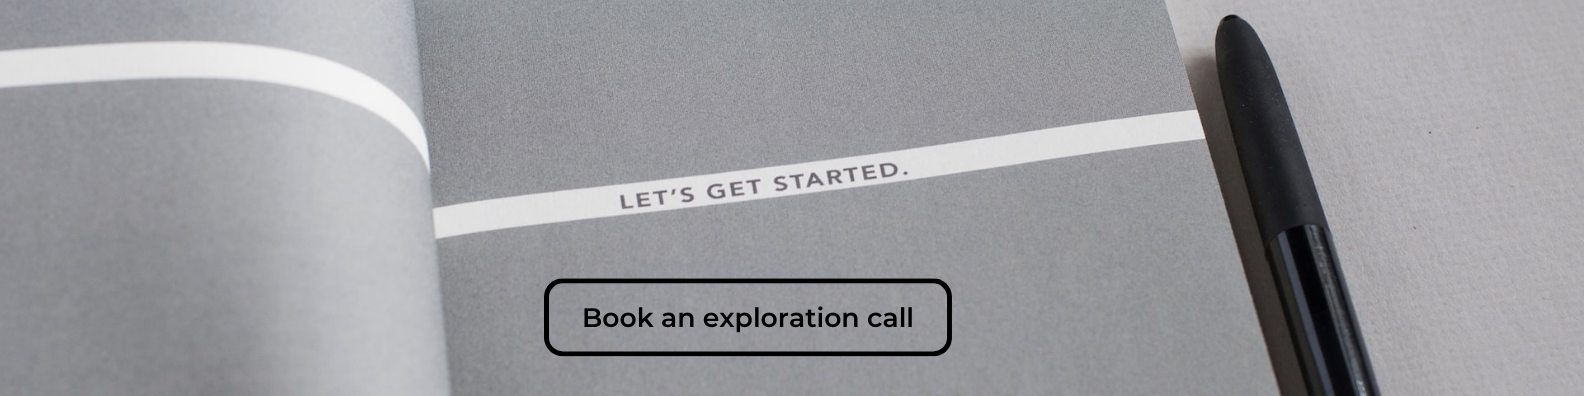 Book an exploration call